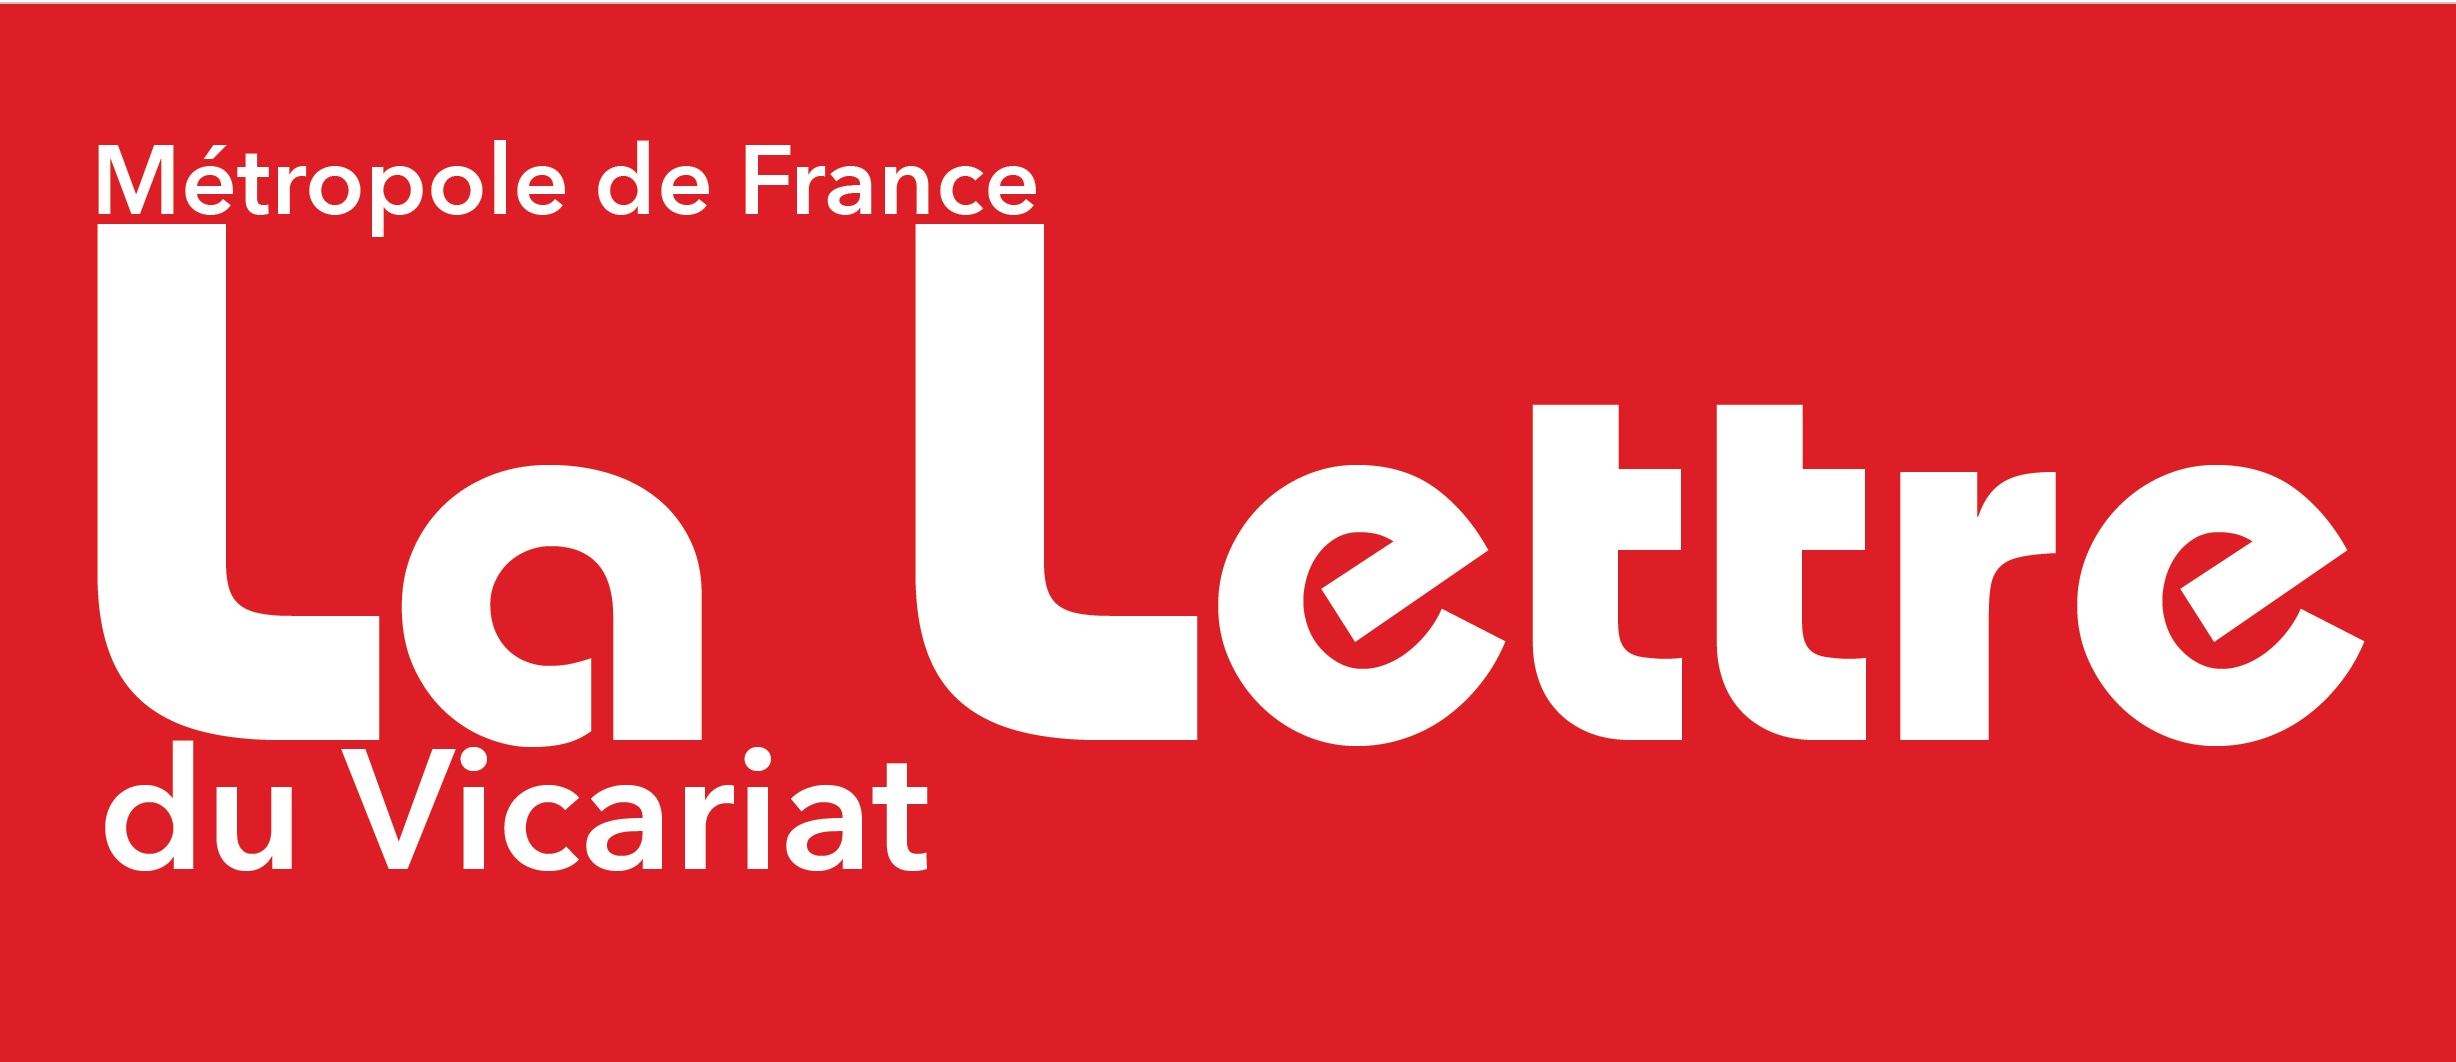 lettre viacriat